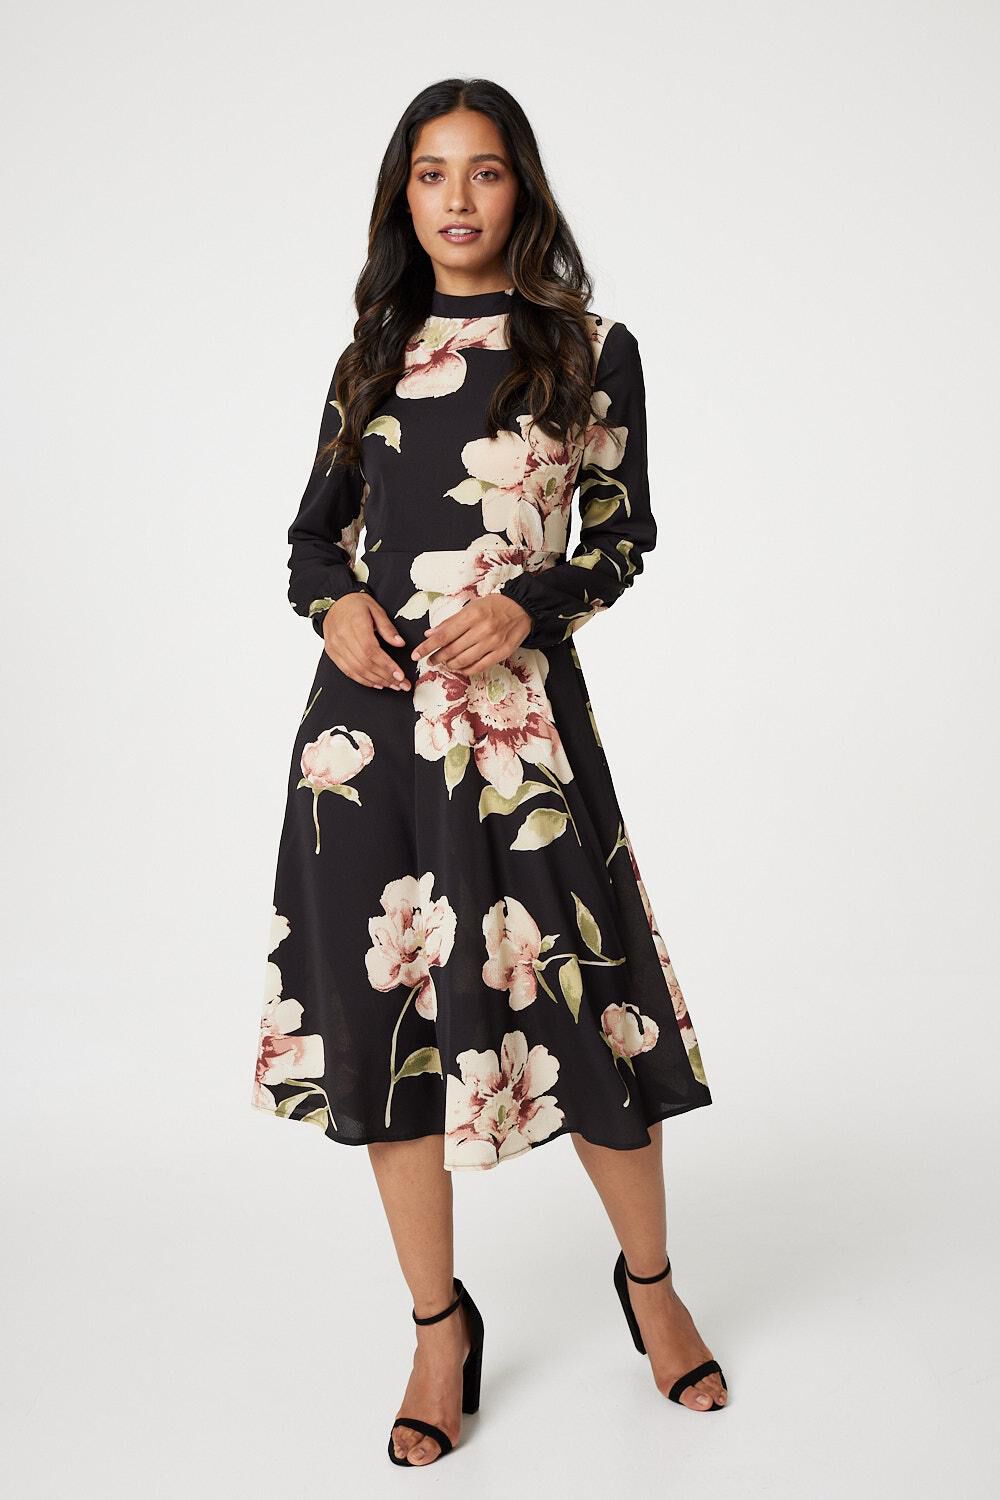 Izabel London Women’s Black and Beige Floral Print Long Sleeve Midi Tea Dress, Size: 18